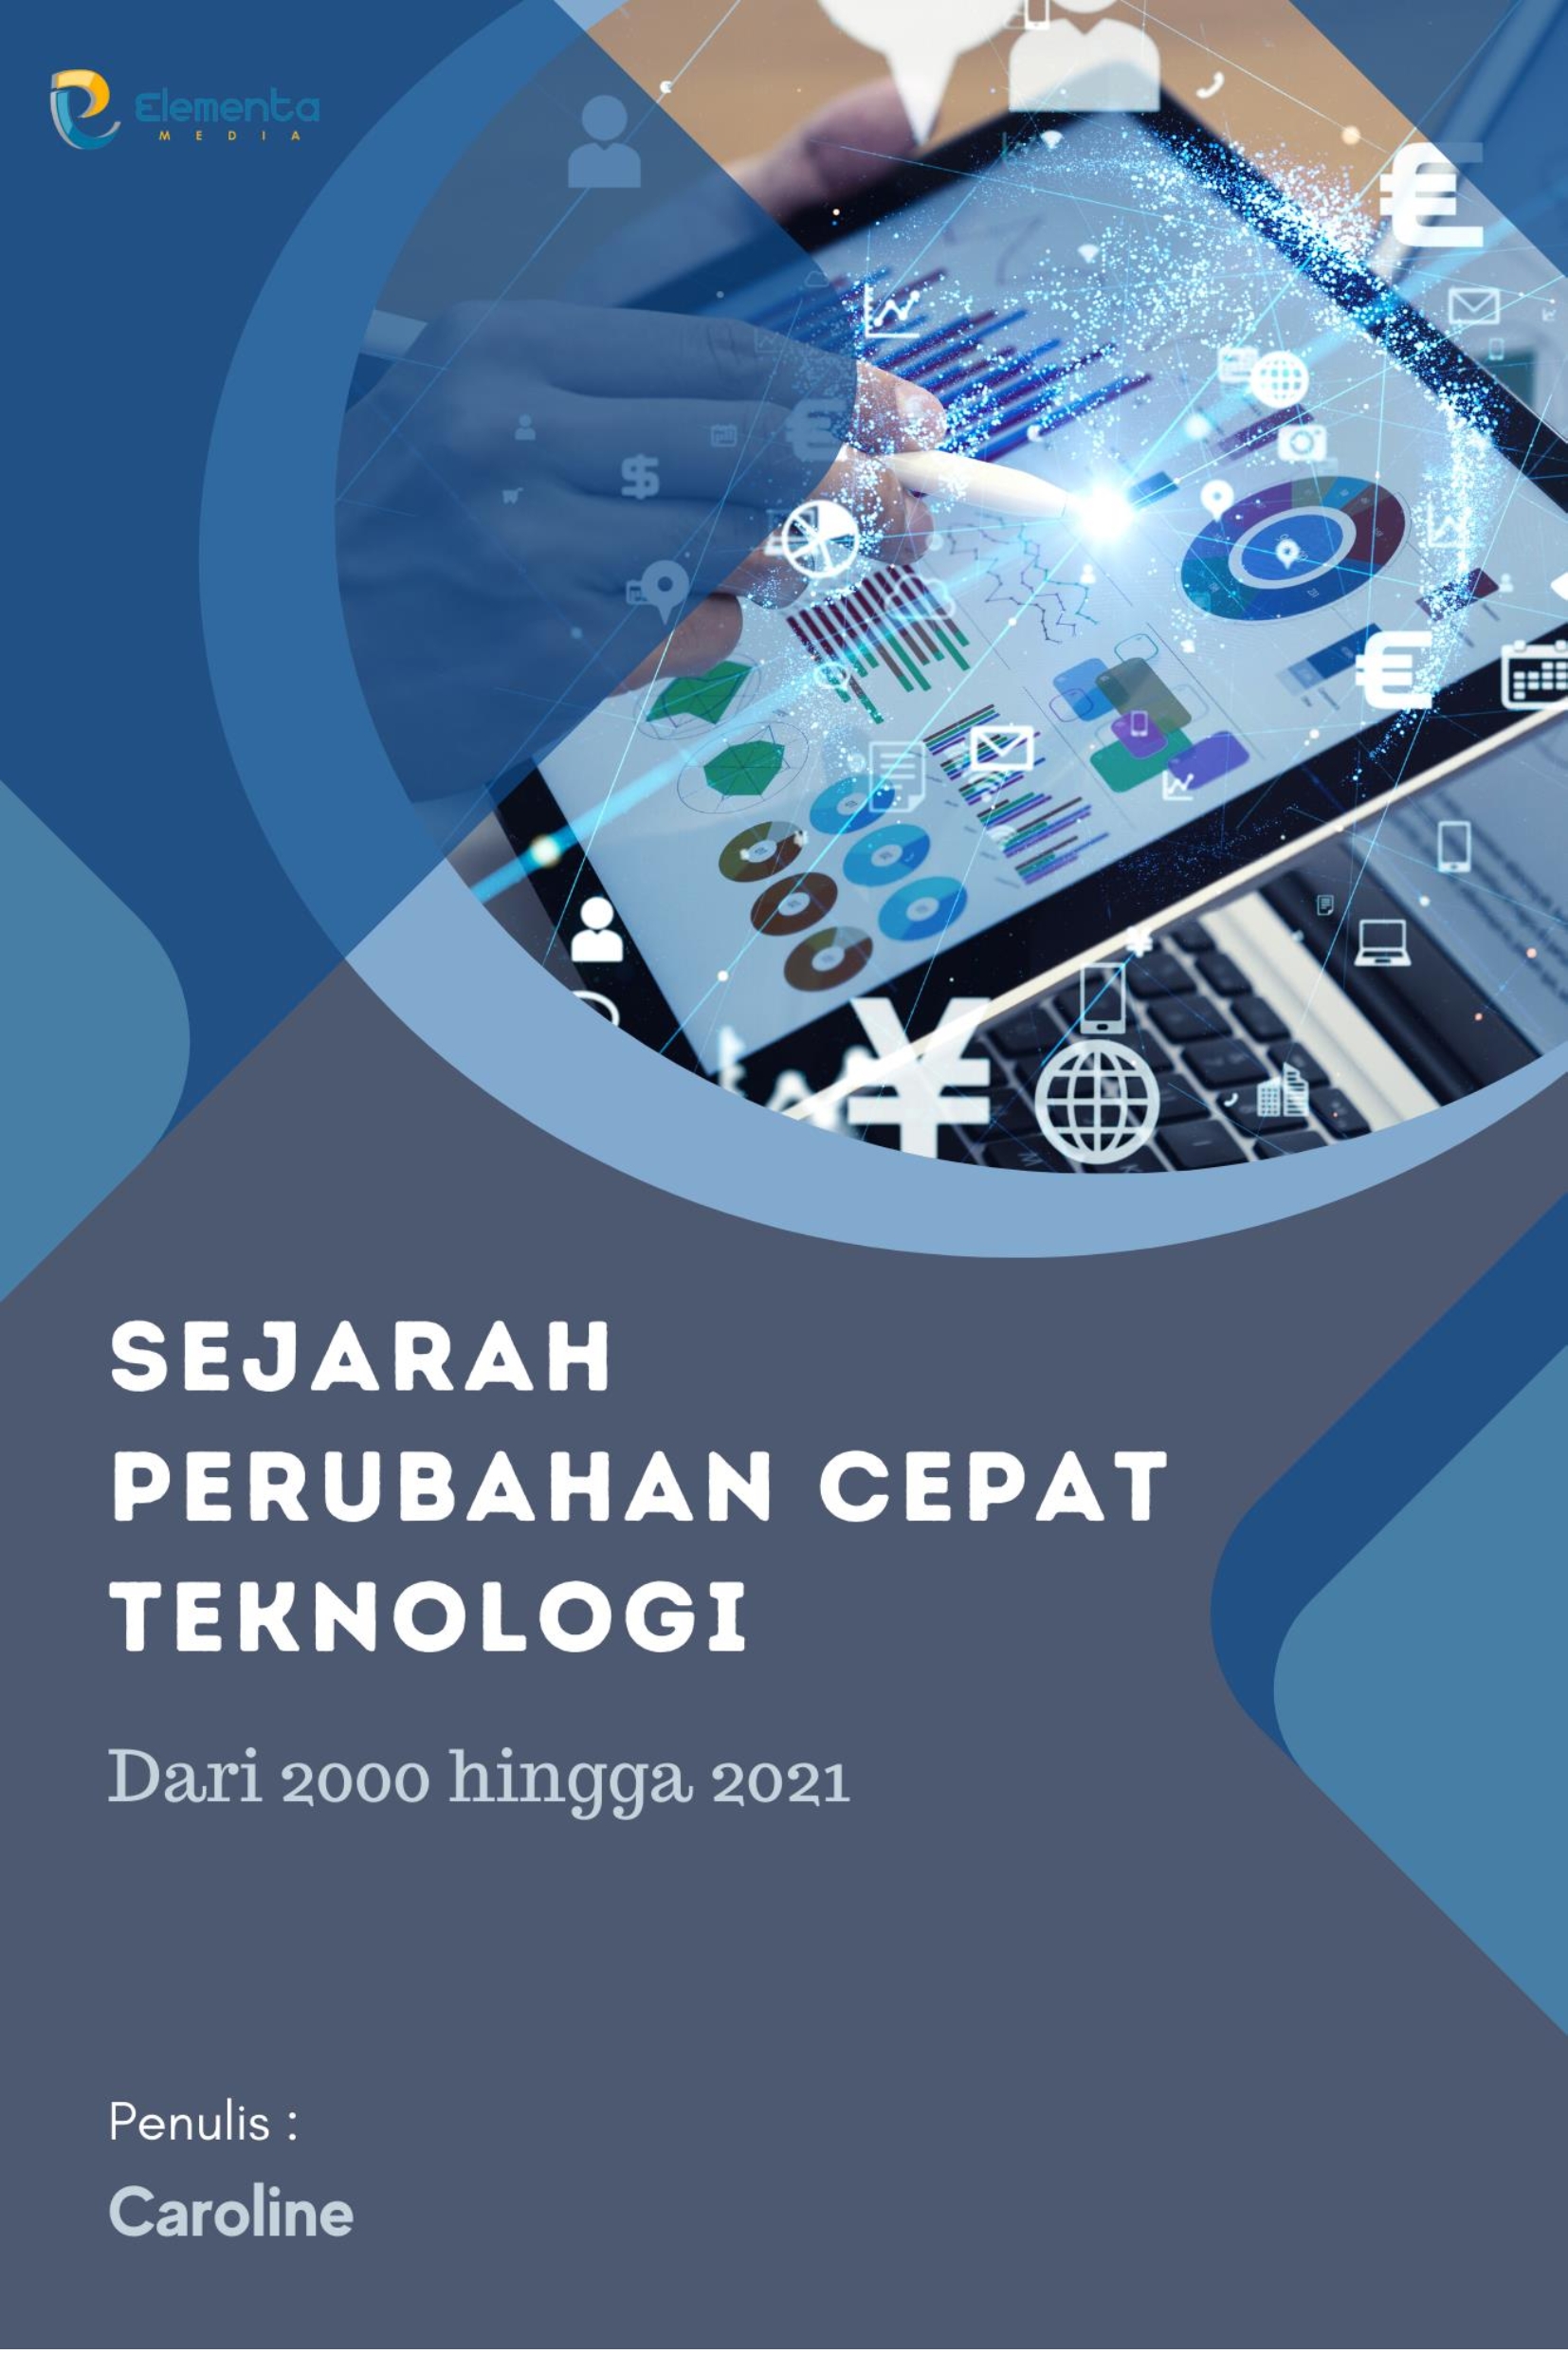 Sejarah perubahan cepat teknologi [sumber elektronis] : dari 2000 hingga 2021